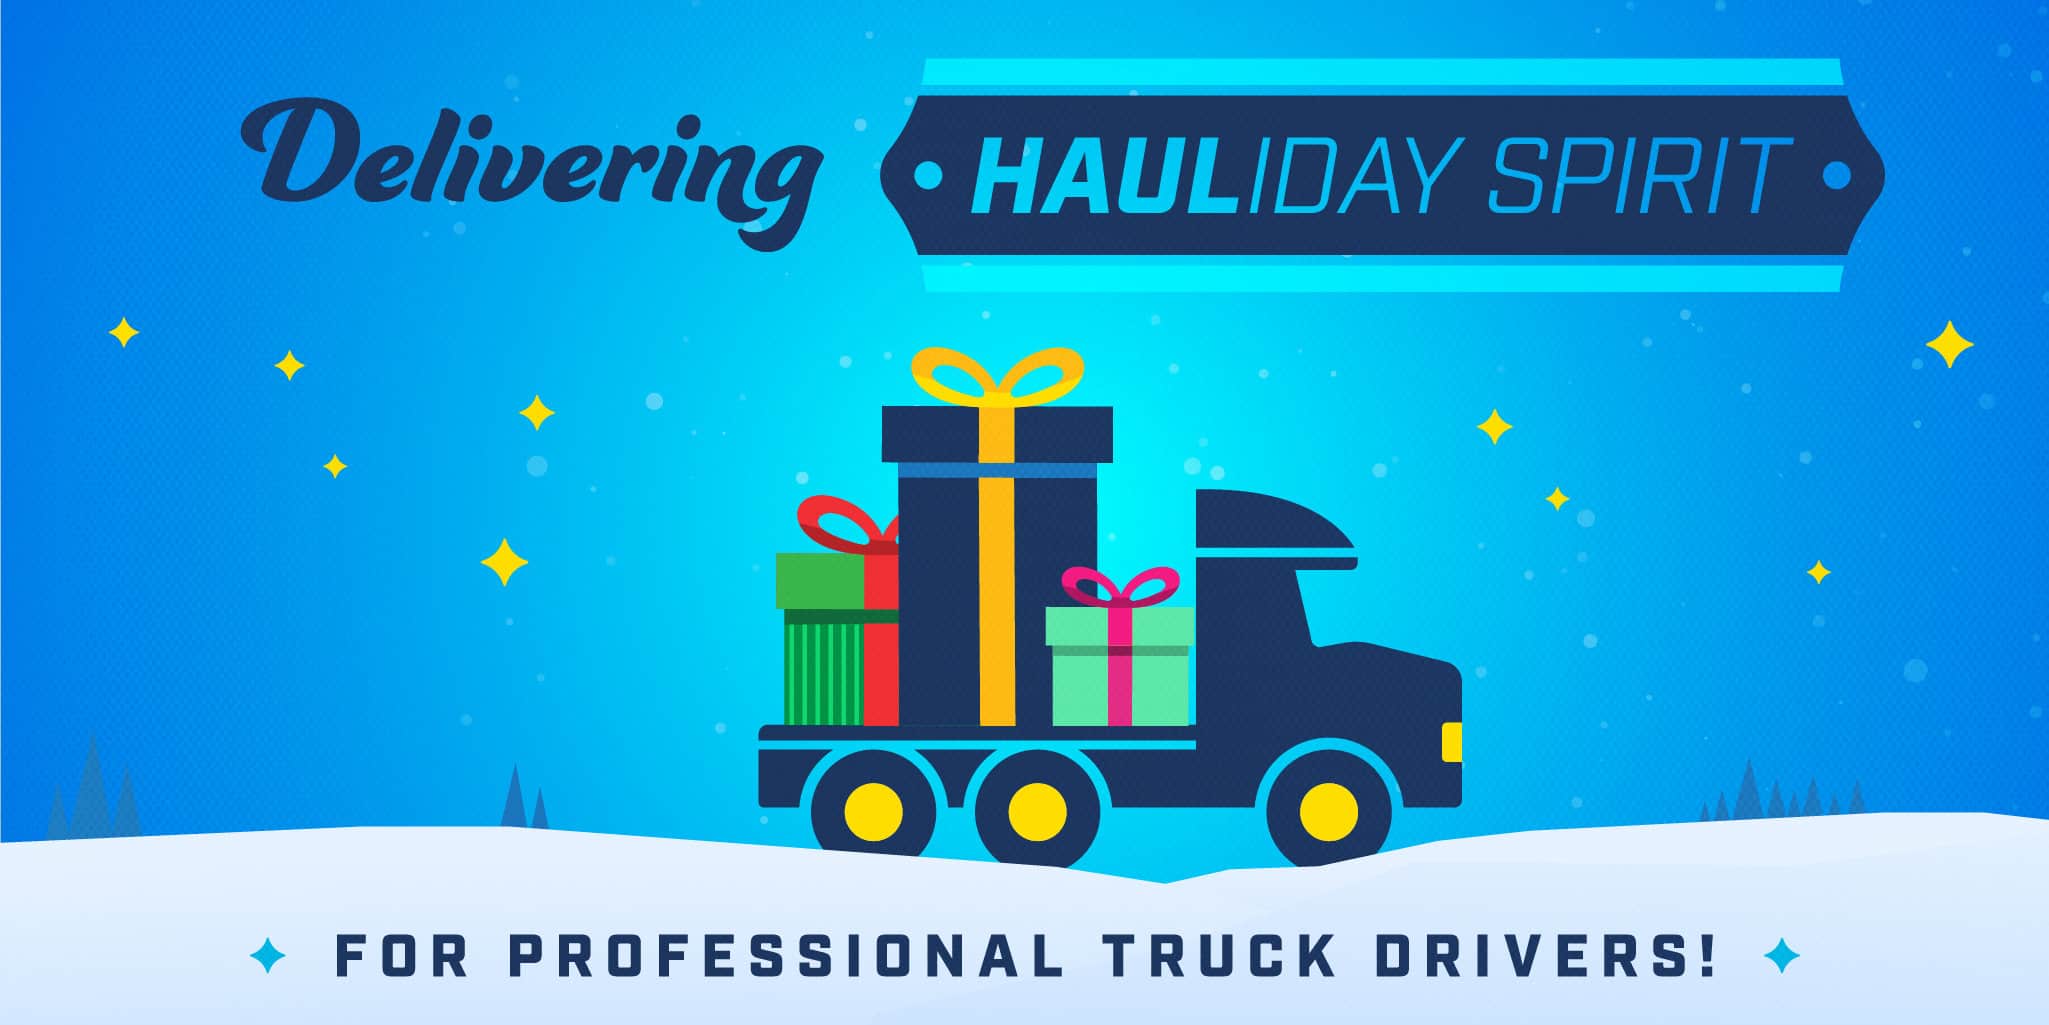 Hauliday Spirit: Gift Ideas for Truckers